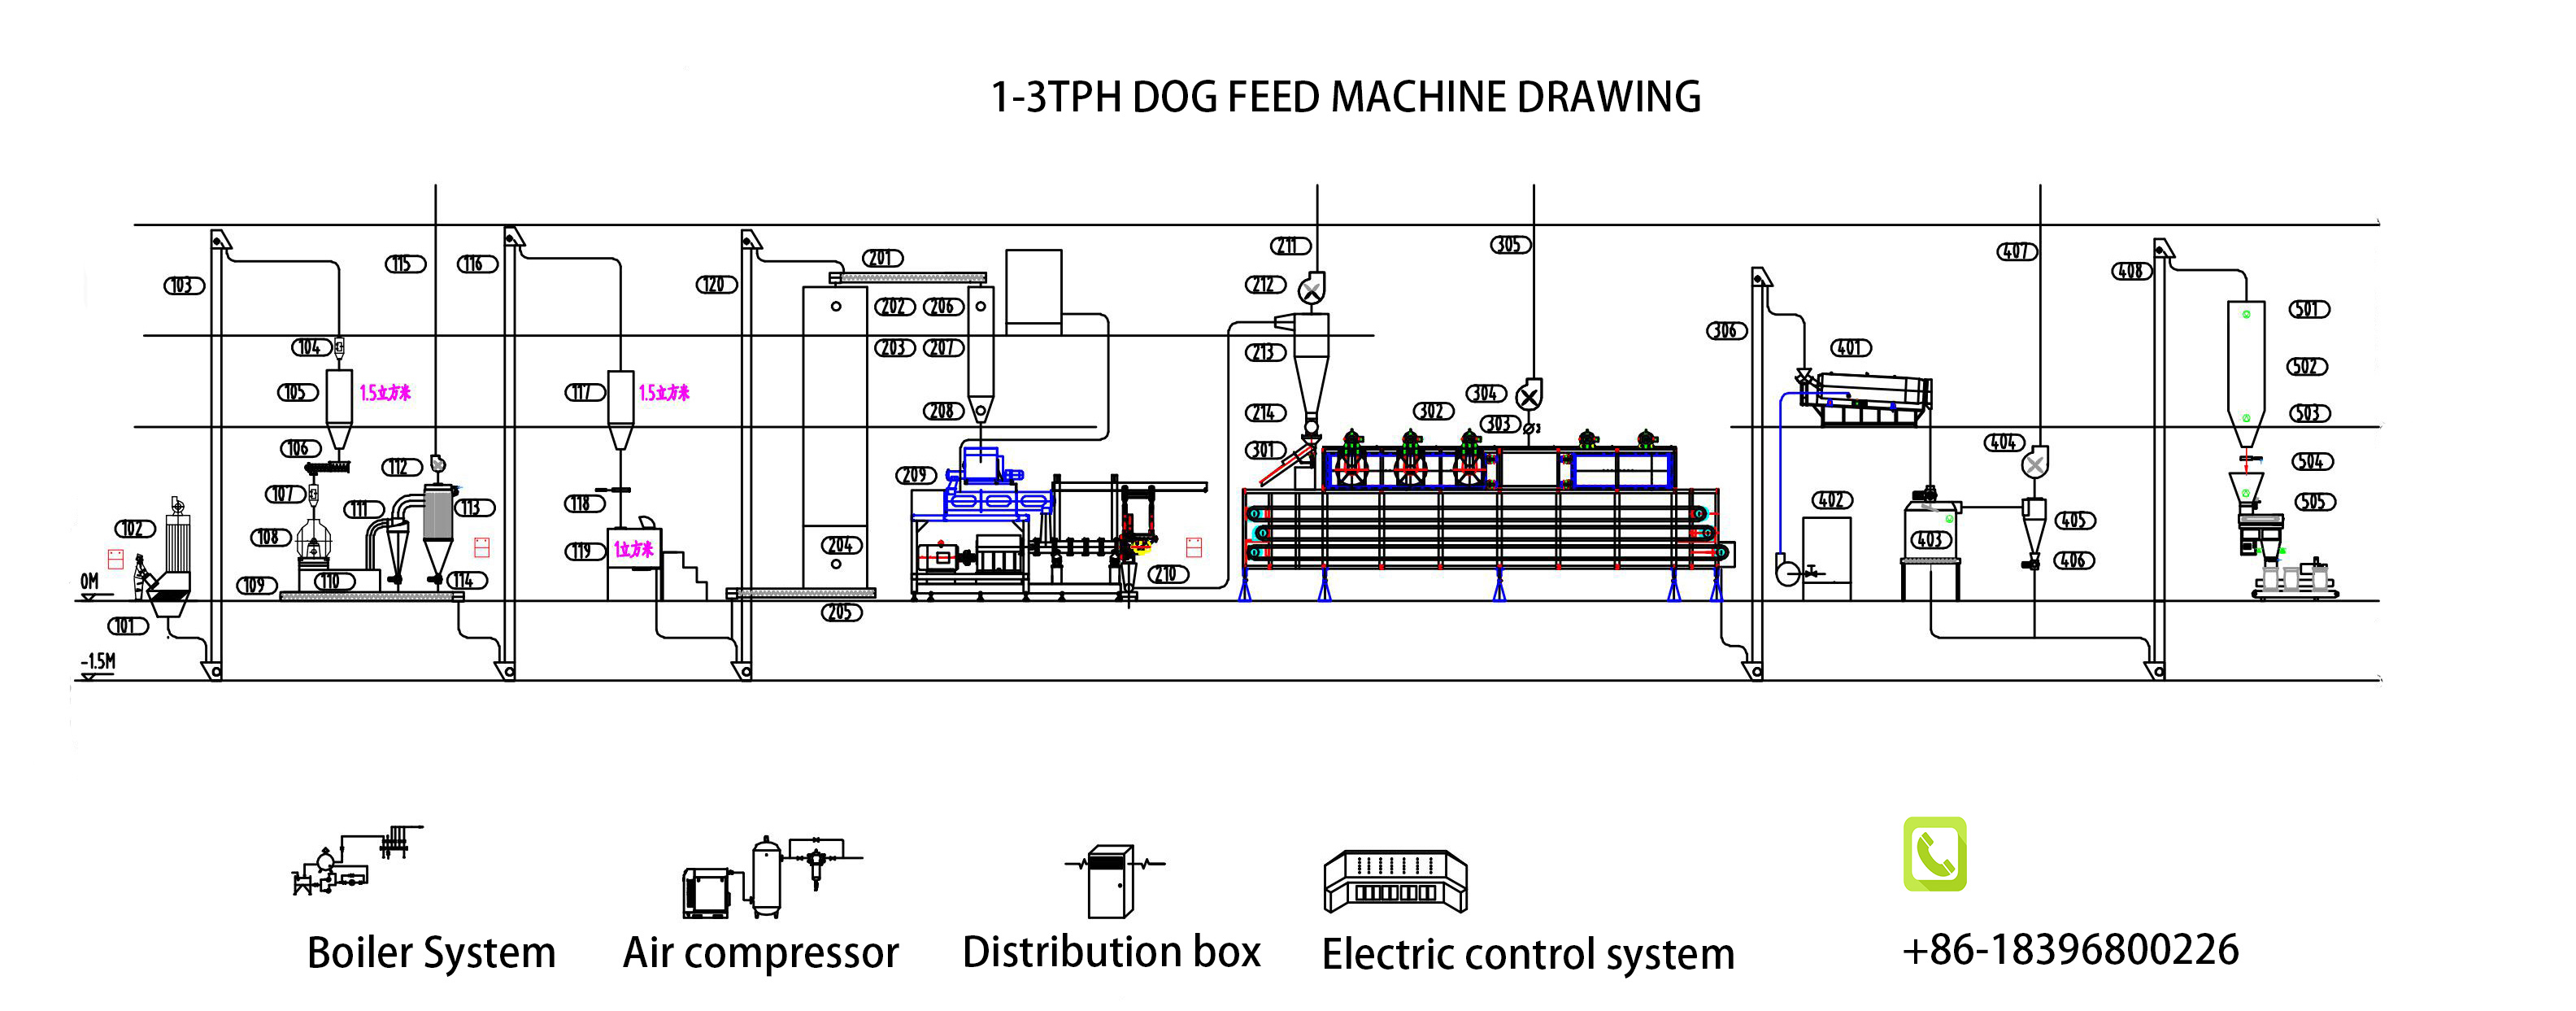 small dog food machine